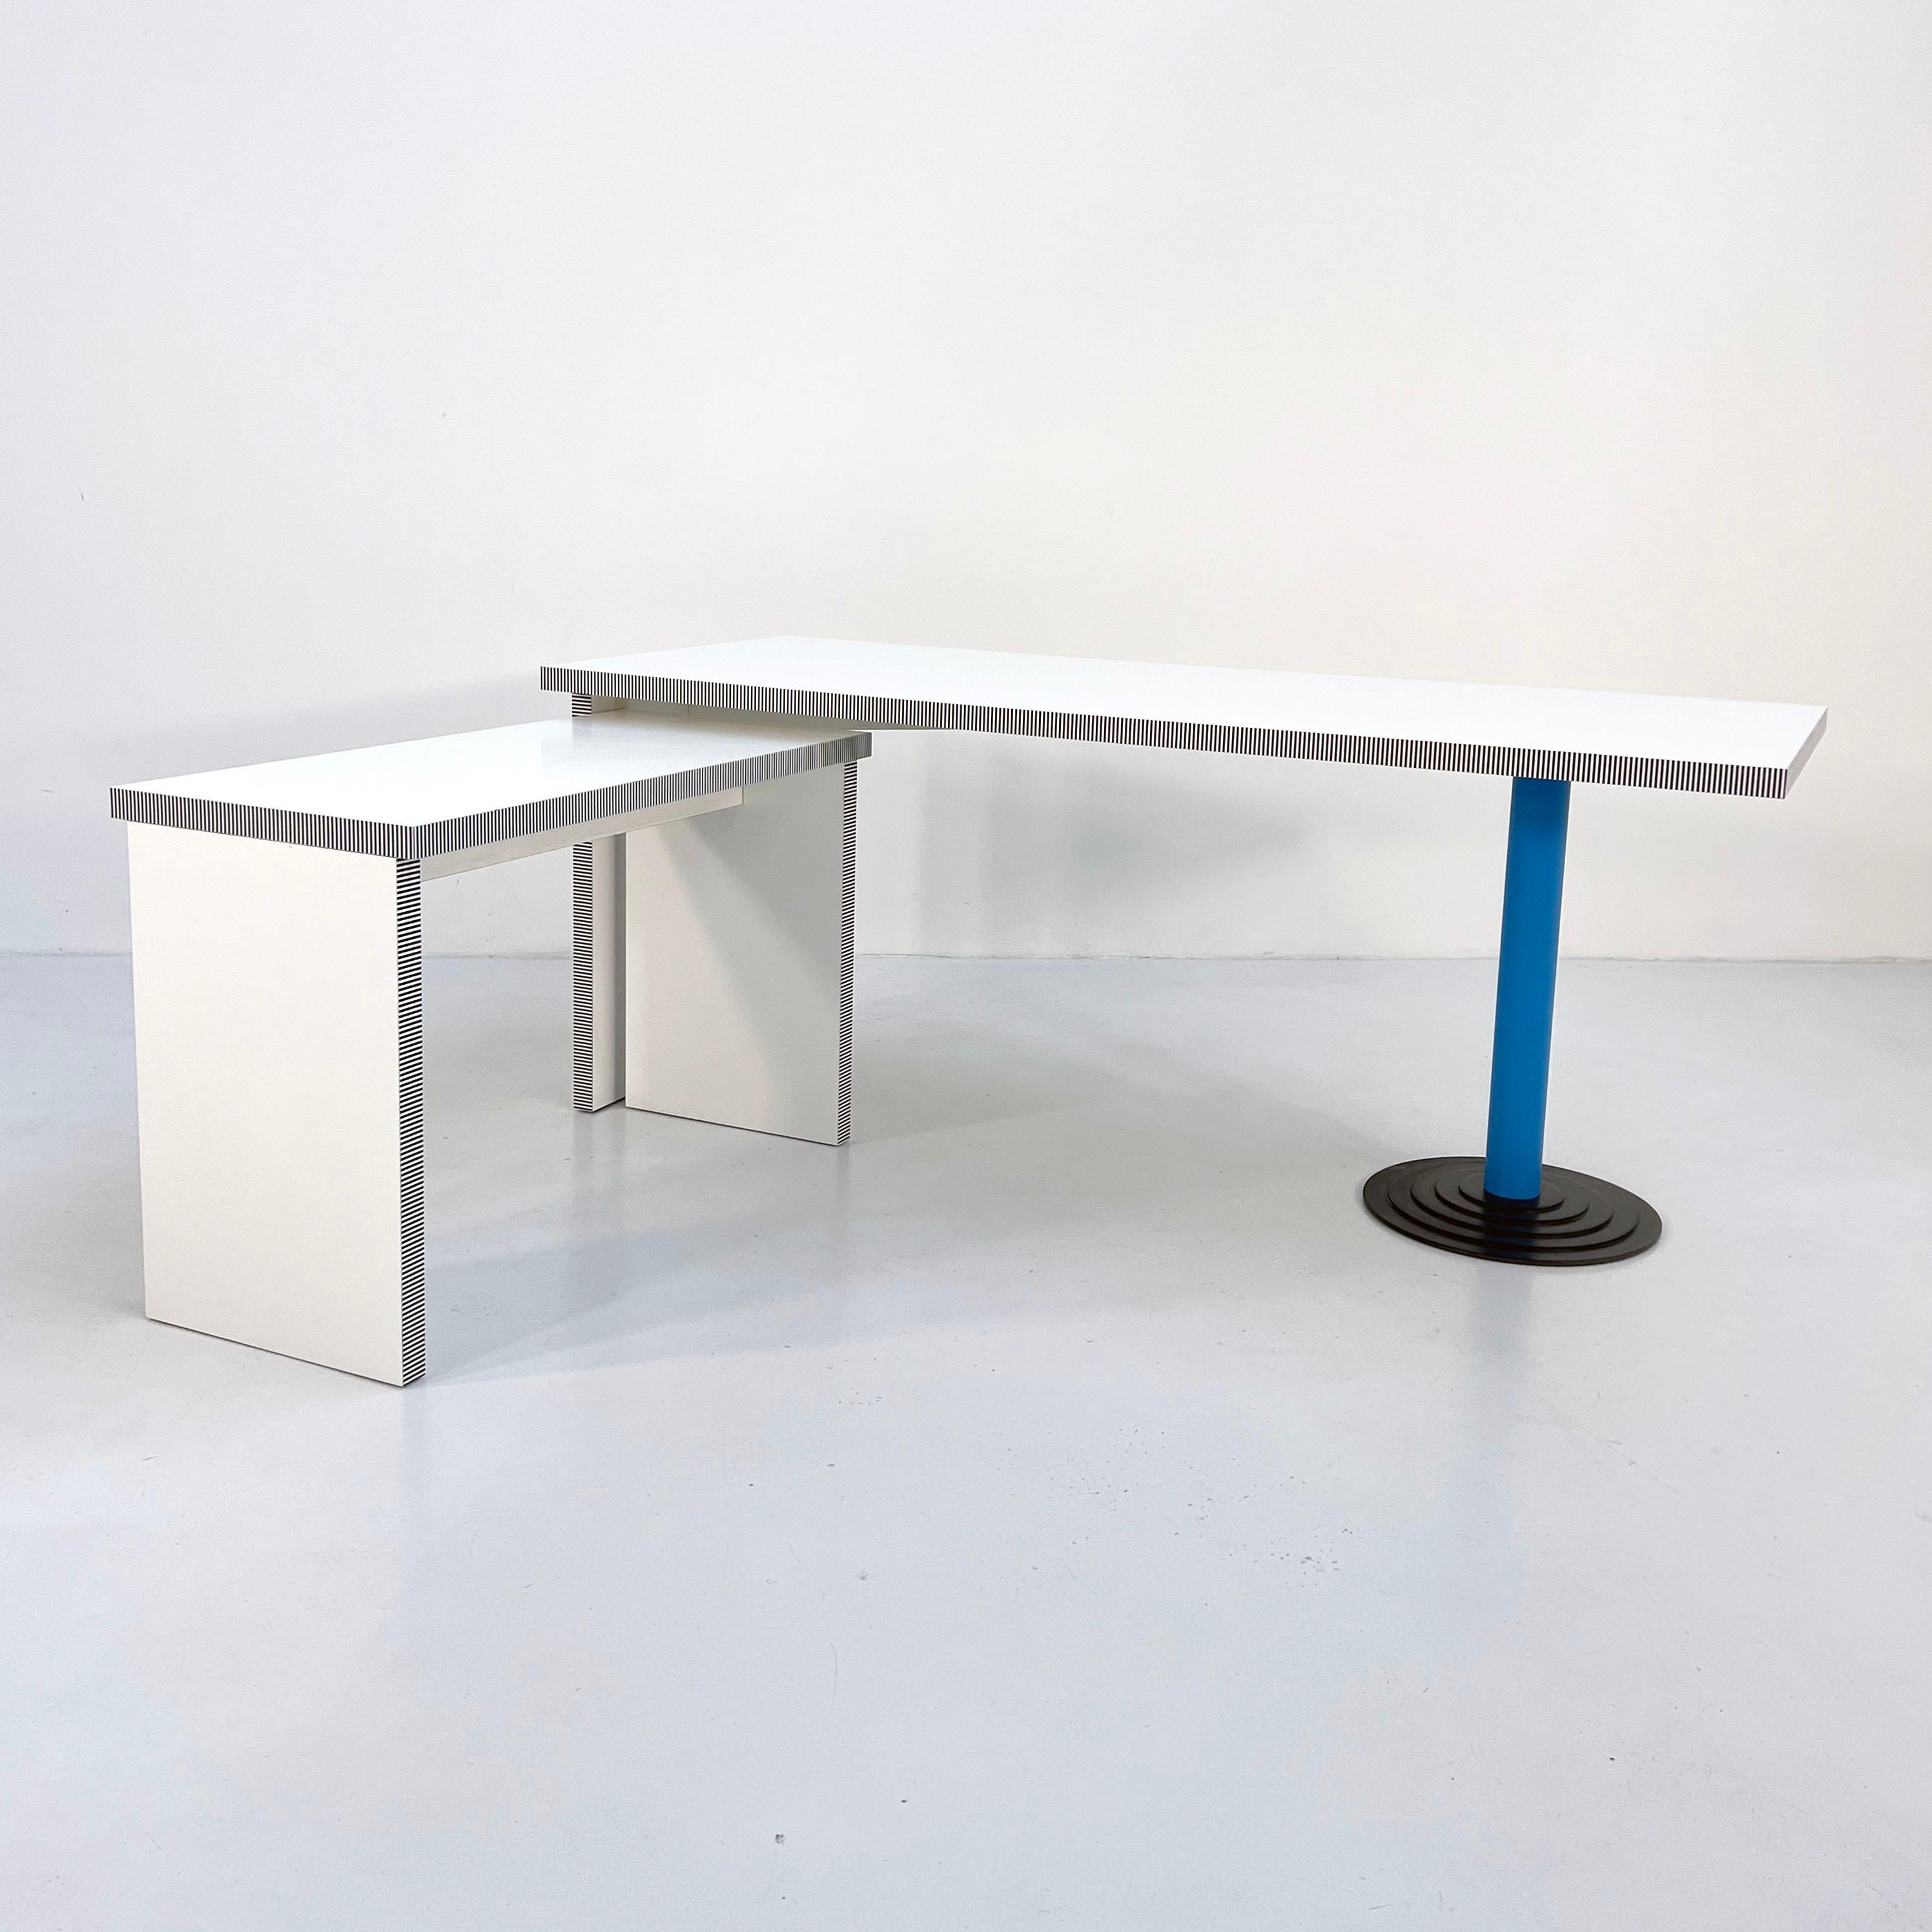 Large Kroma Desk by Antonia Astori for Driade, 1980s

Designer - Antonia Astori
Producer - Driade
Model - Kroma
Design Period - Eighties
Measurements - Big = Width 180 cm x Depth 73 cm x Height 74 cm. Small = Width 100 cm x Depth 45 cm x Height 66